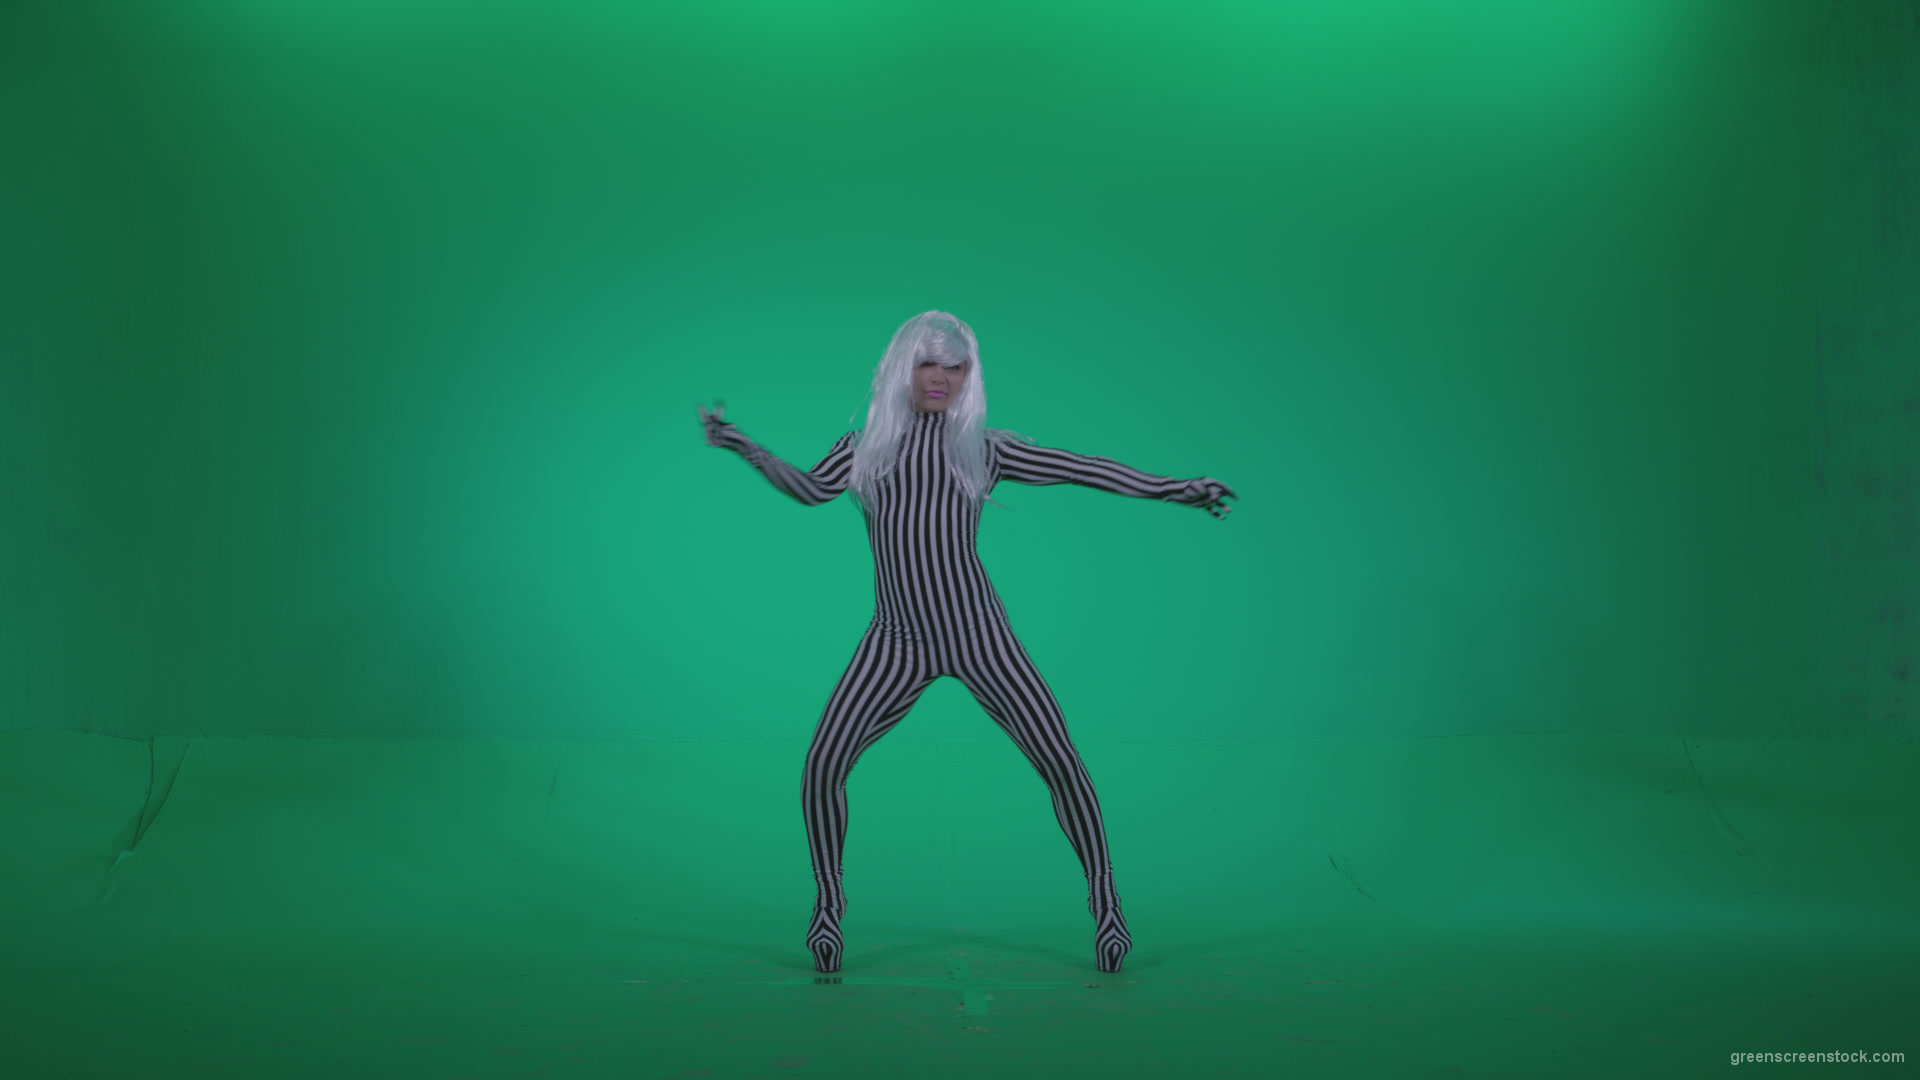 Go-go-Dancer-White-Stripes-s13-Green-Screen-Video-Footage_001 Green Screen Stock